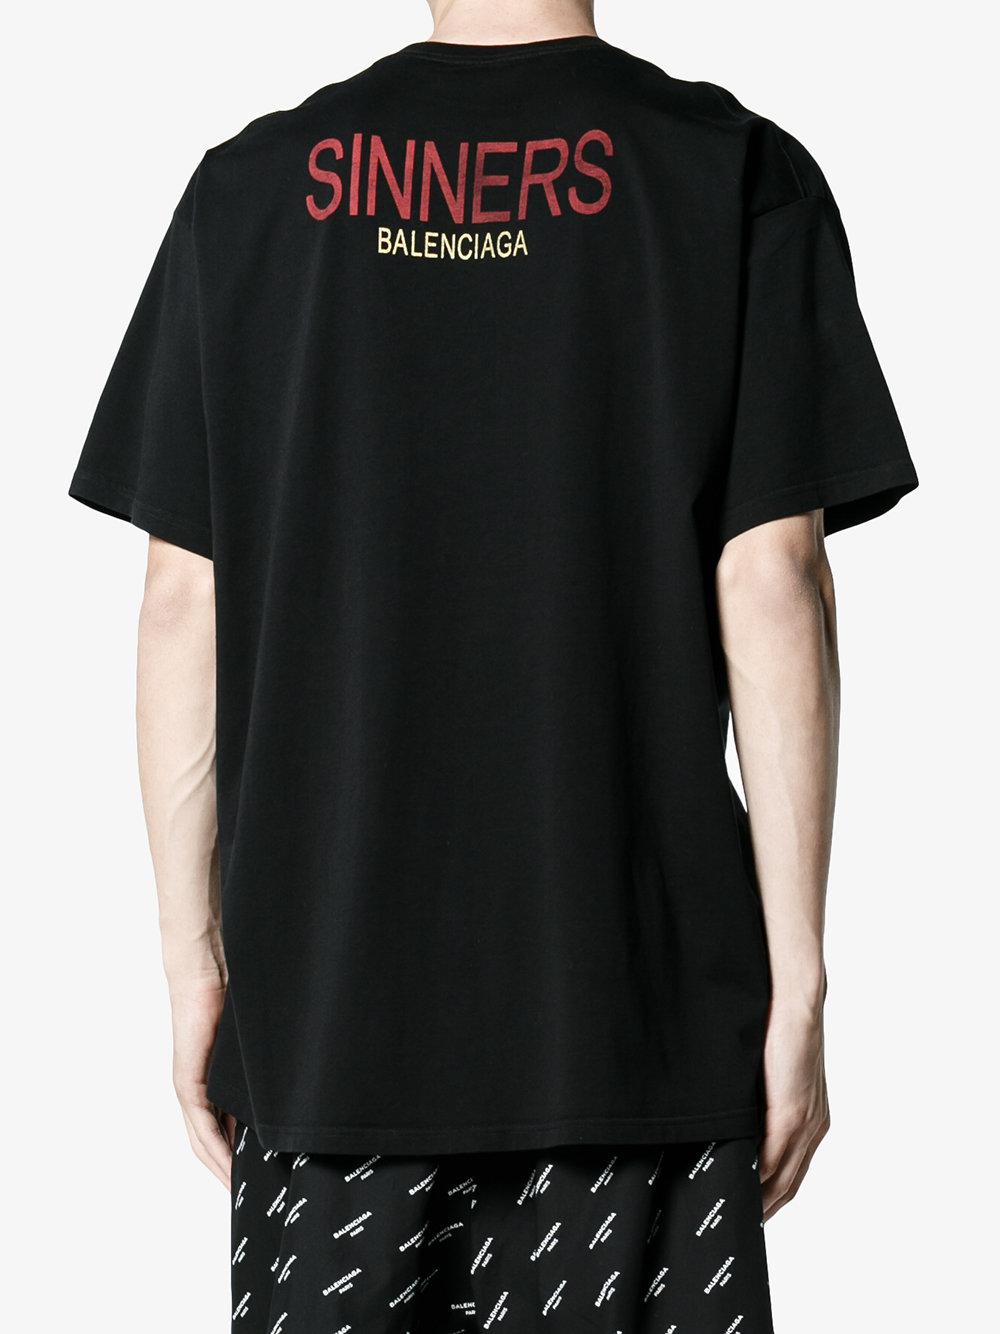 Balenciaga Sinners Black Men | Lyst